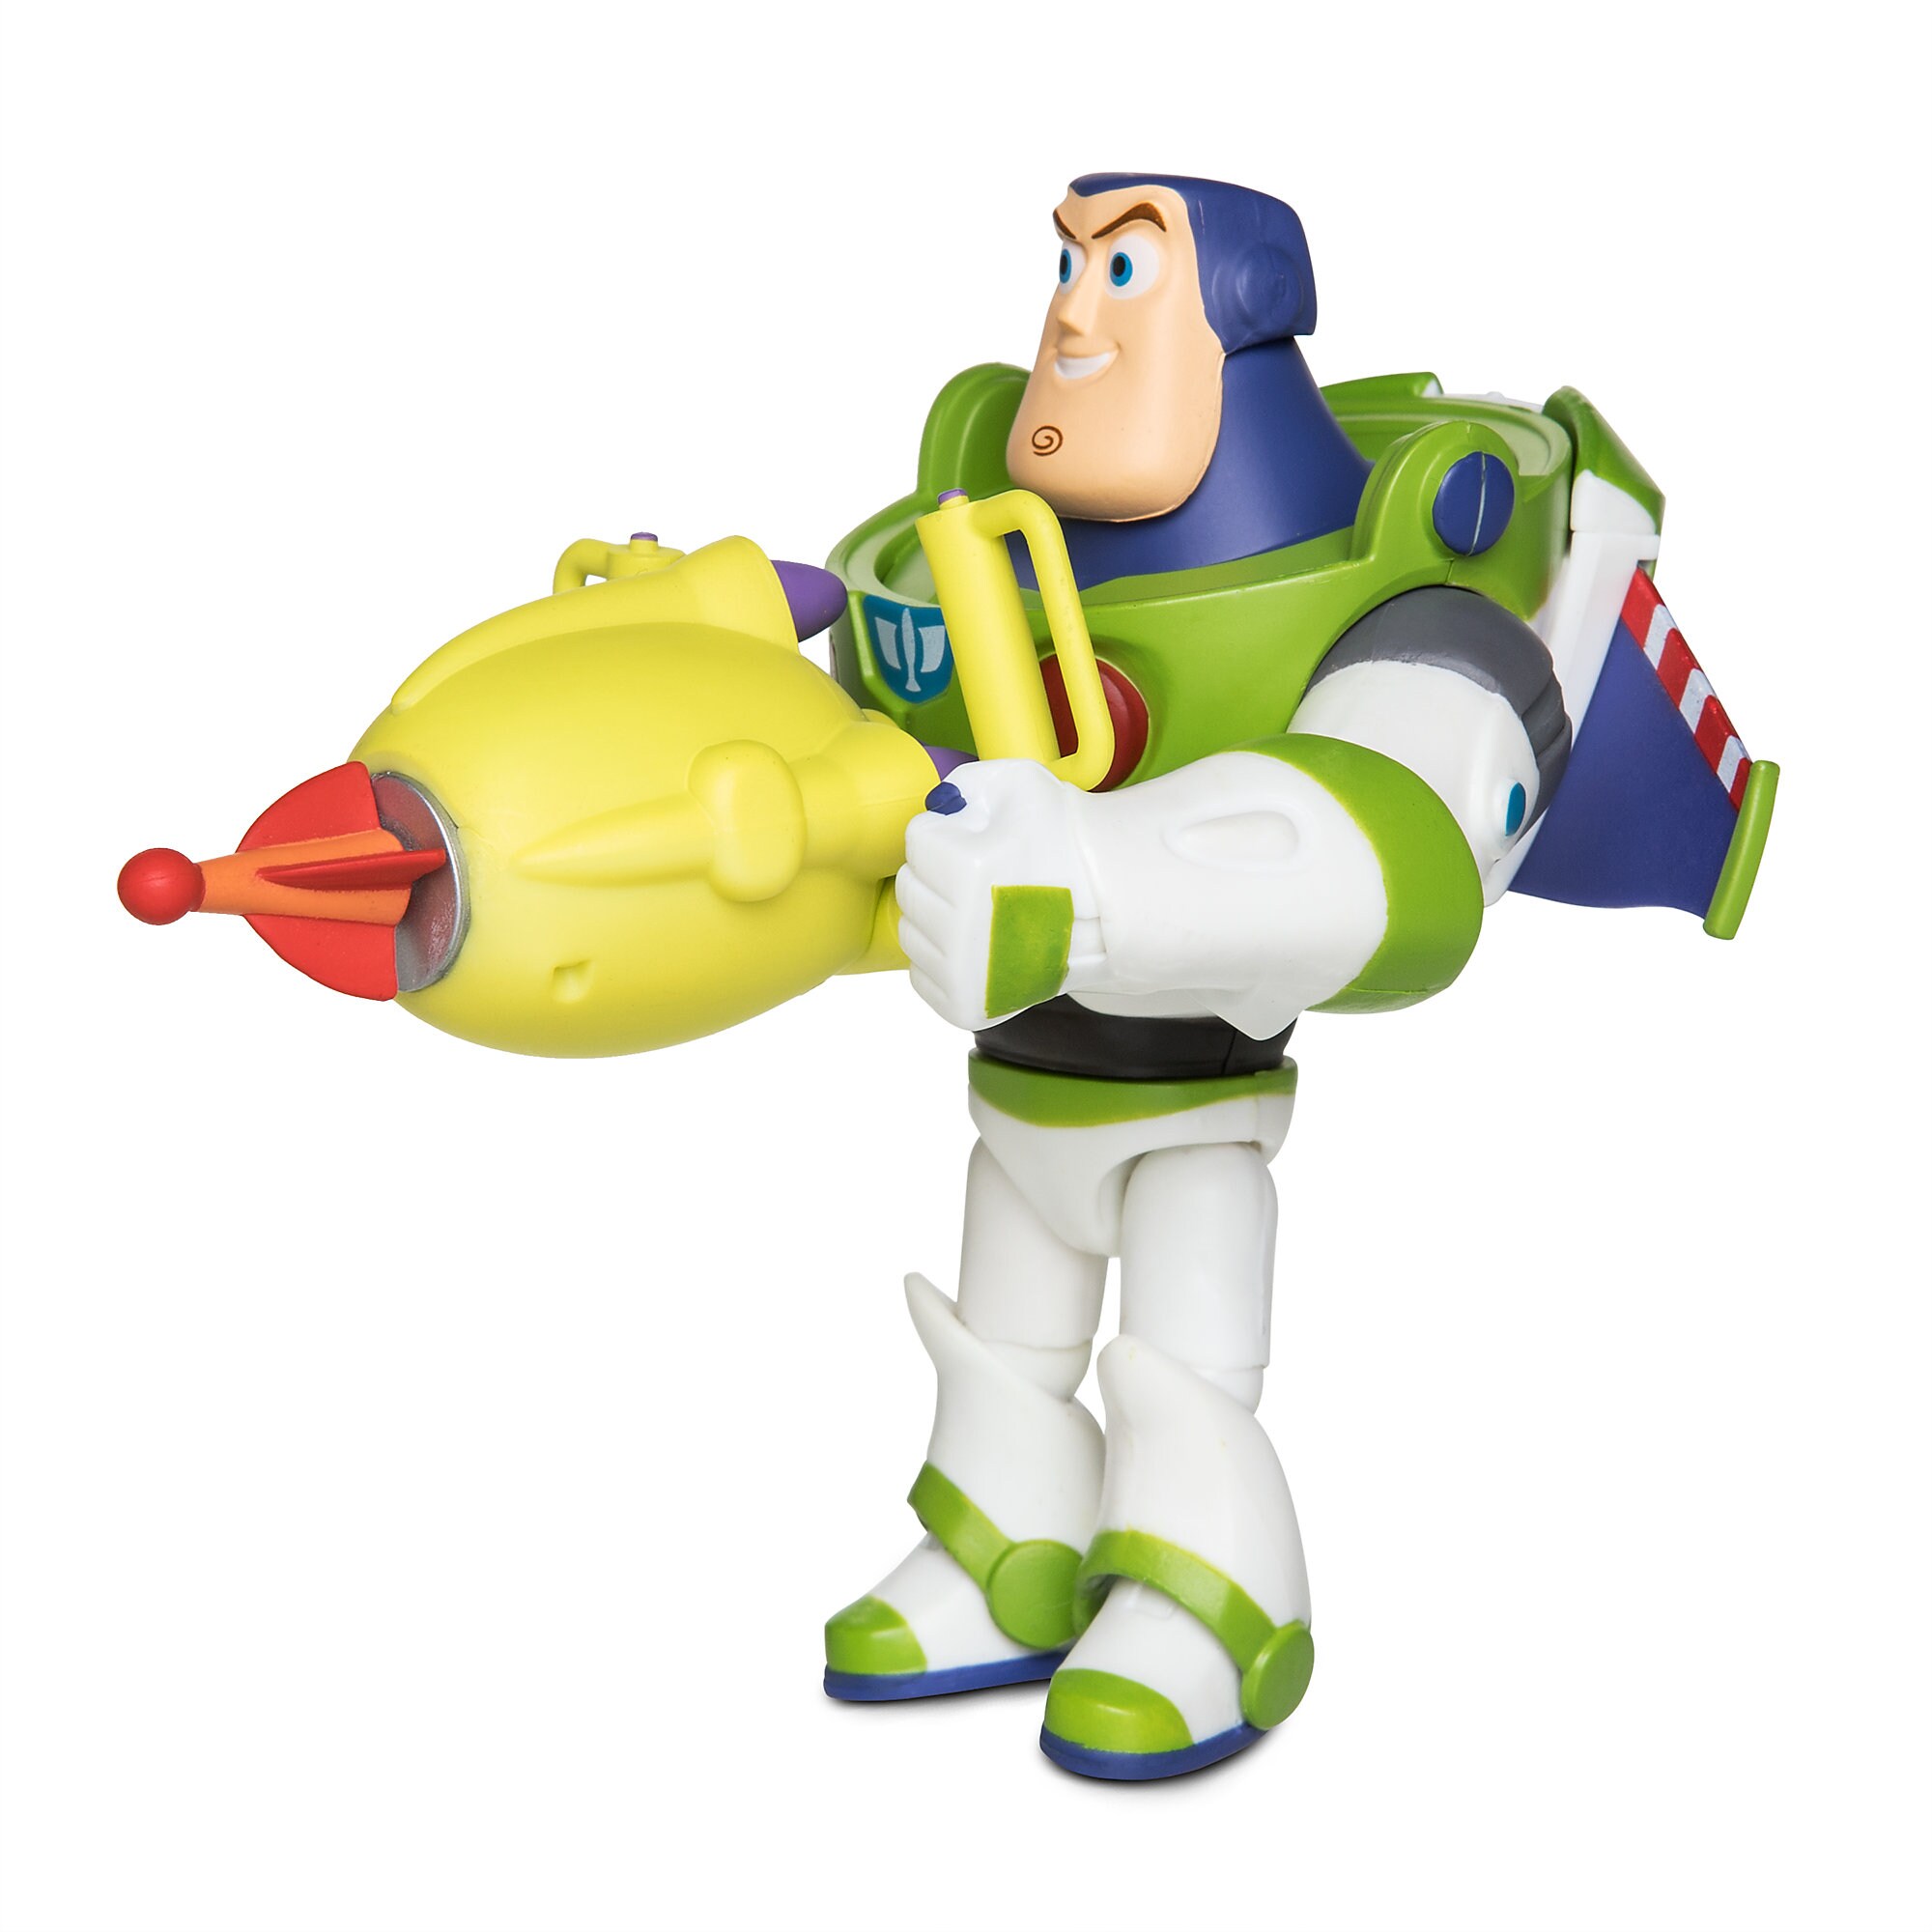 Buzz Lightyear Action Figure - Toy Story 4 - PIXAR Toybox